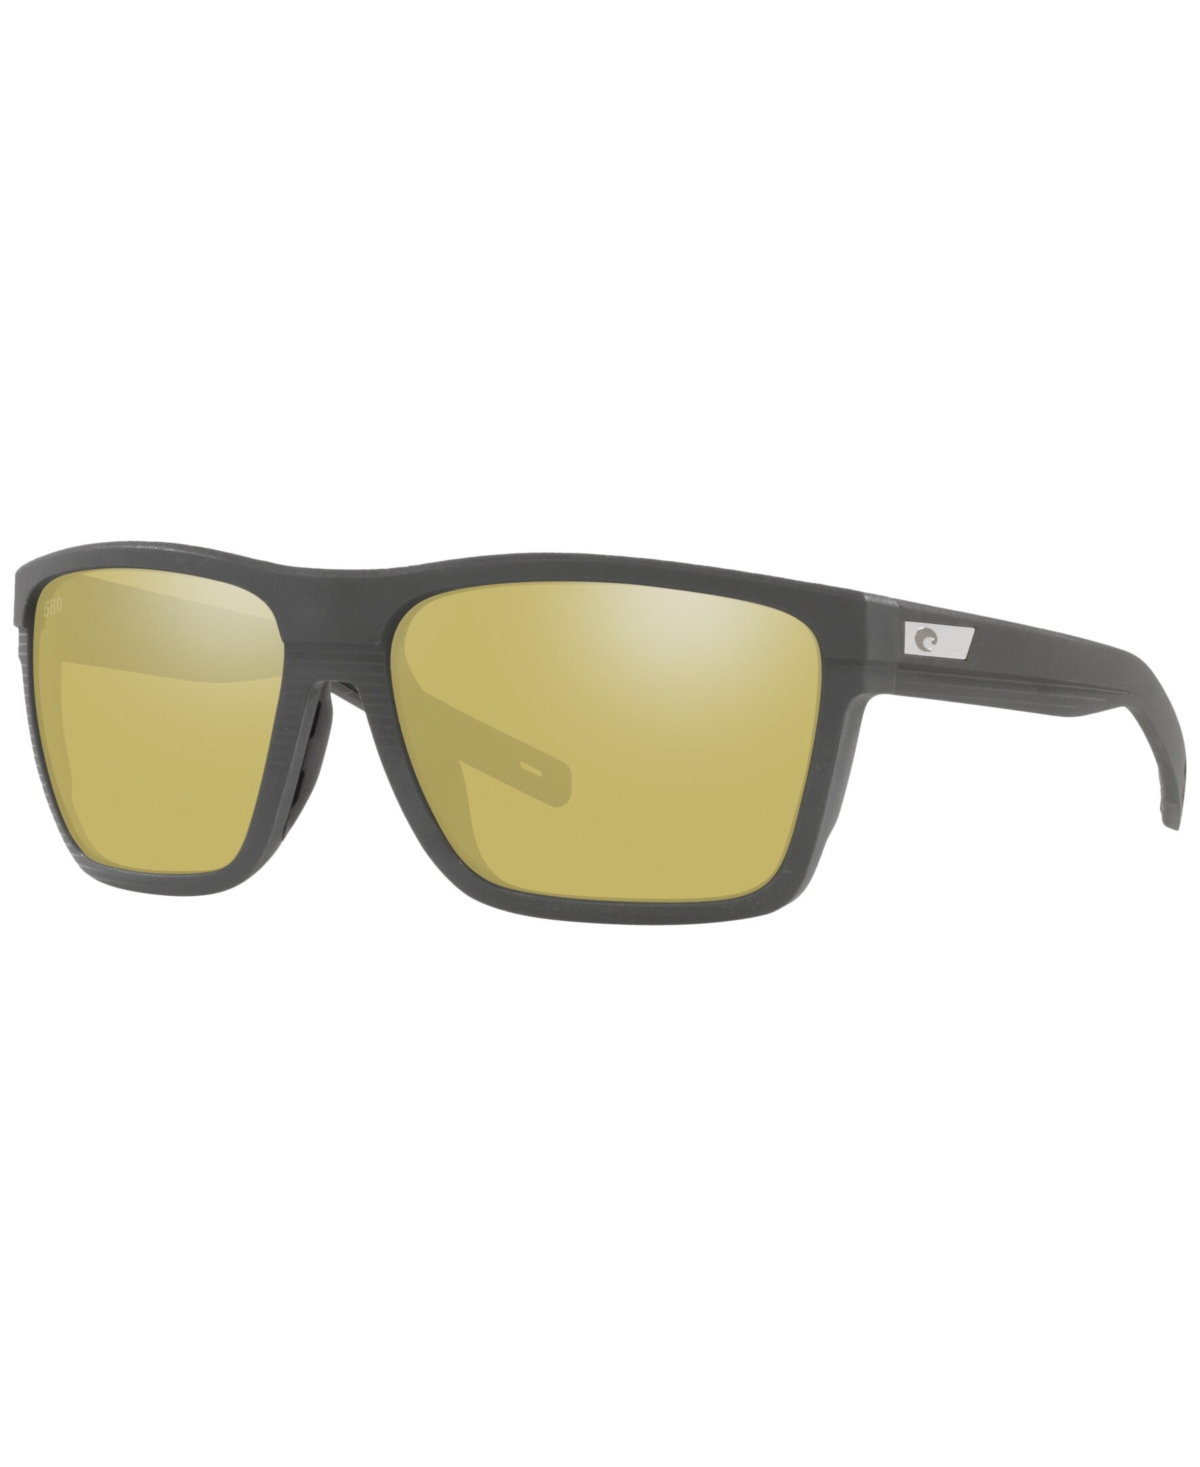 Men's Polarized Sunglasses, Pargo 61 - Gray